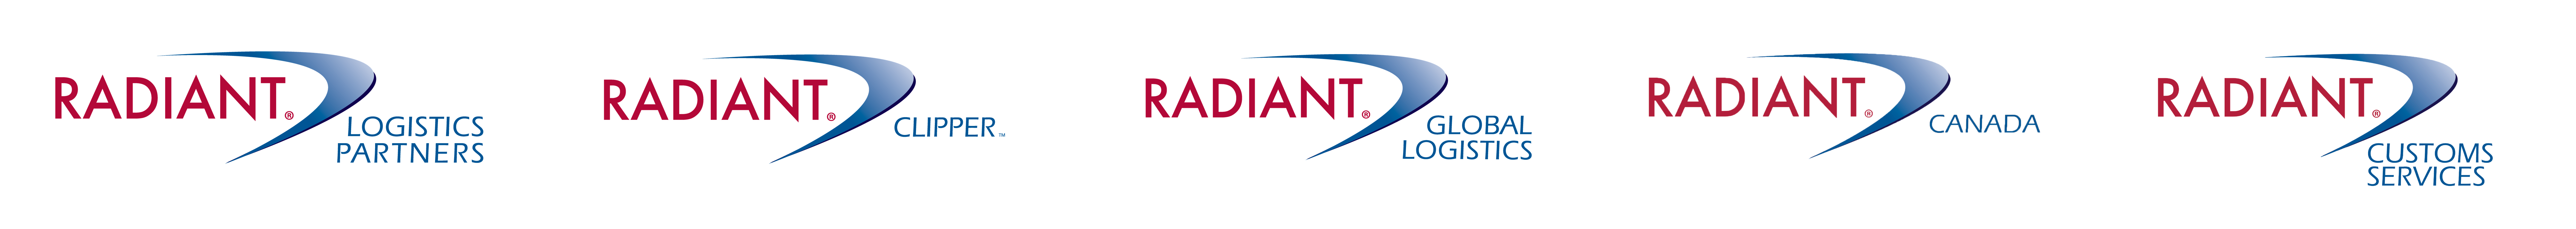 Radiant logos